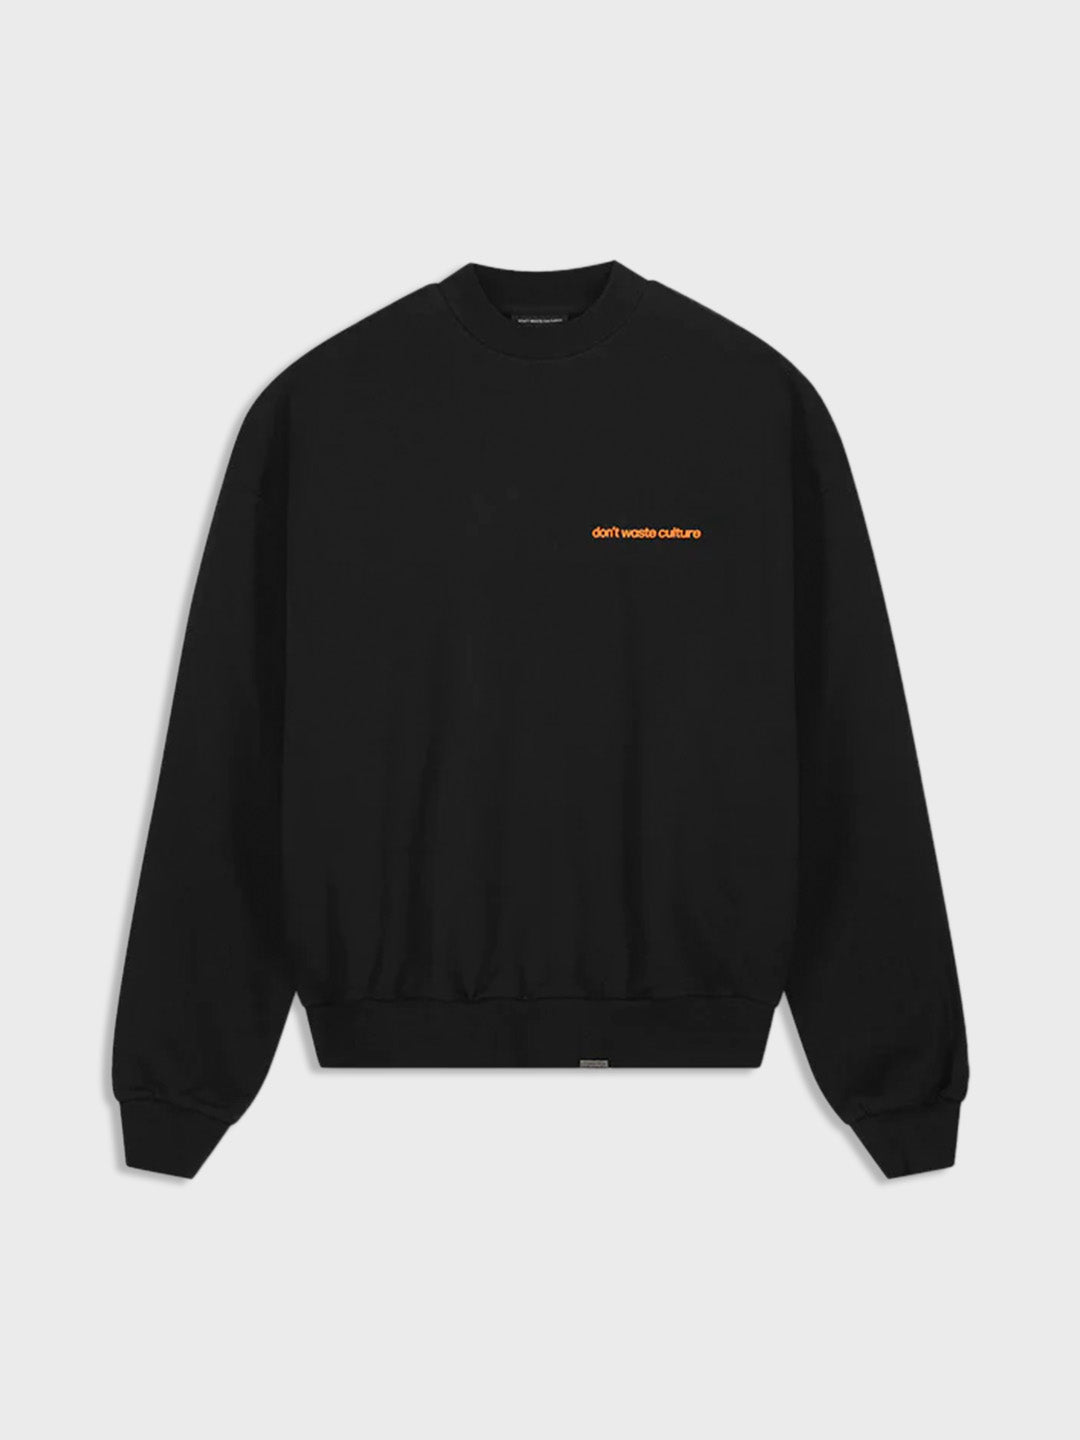 don't waste culture oversized crewneck sweater black